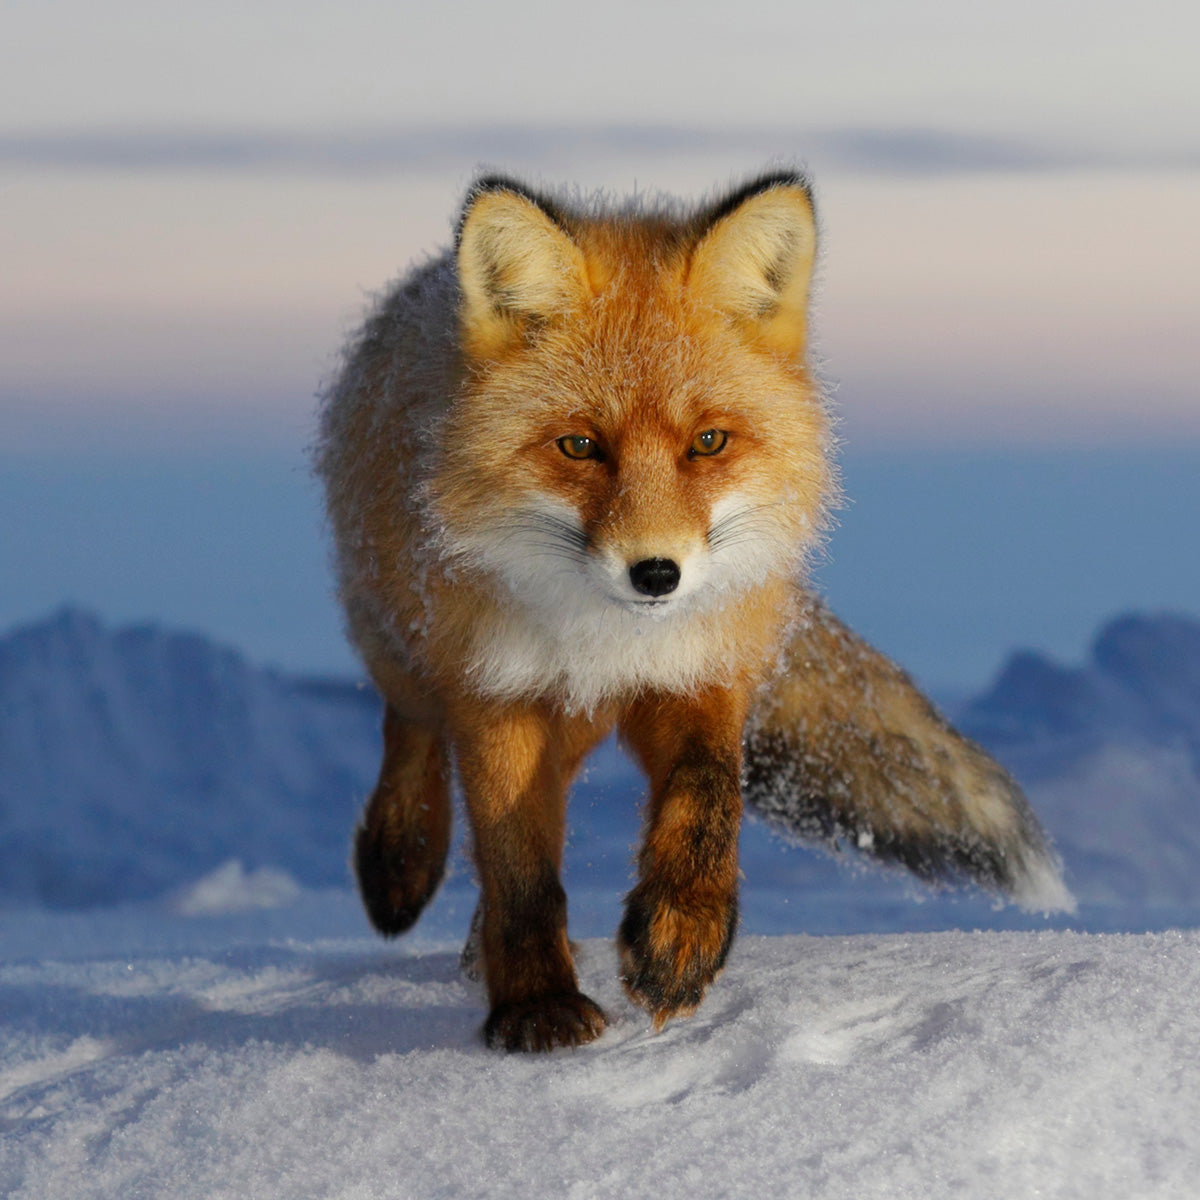 Adopt an Arctic Fox  Symbolic Adoptions from WWF